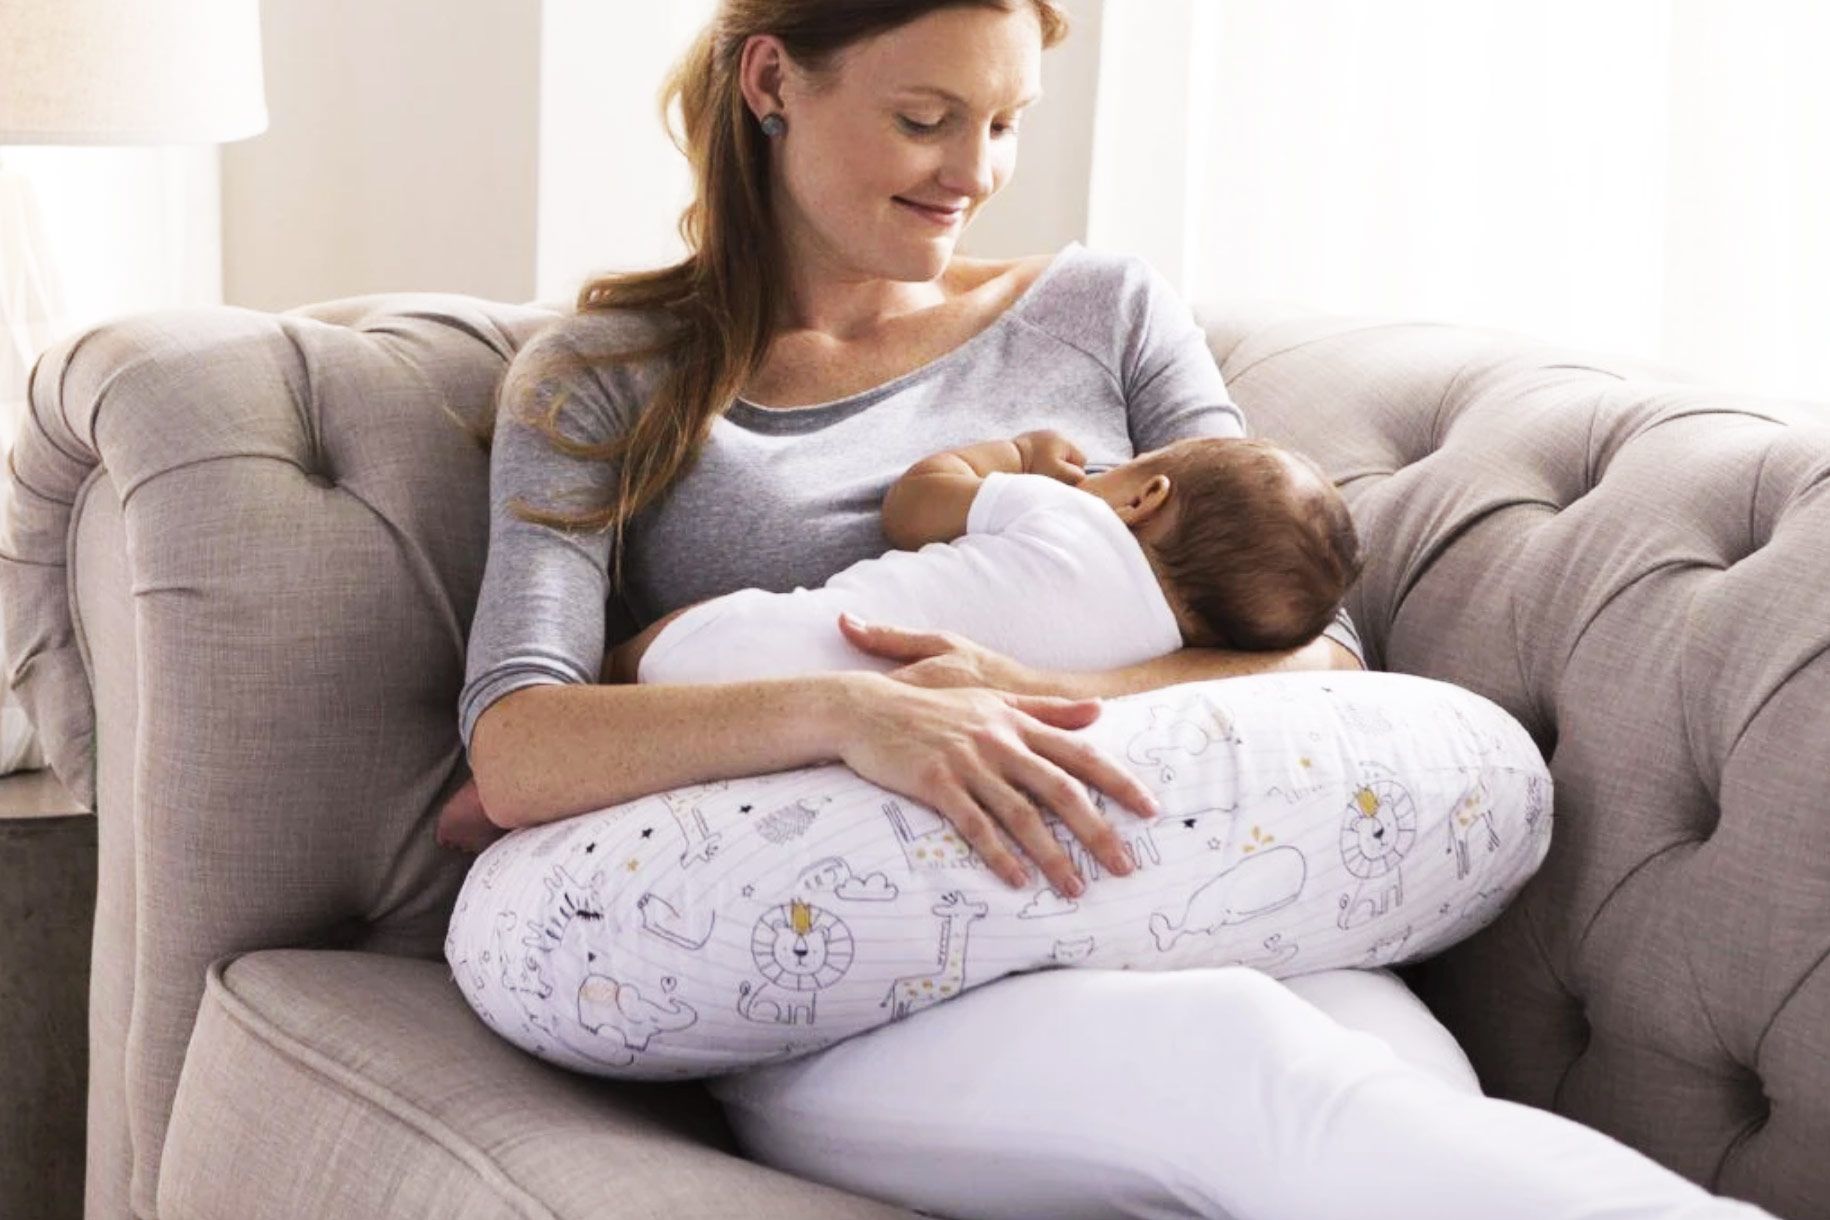 Momcozy Standard Nursing/Breastfeeding Pillows, Adjustable Waist Strap